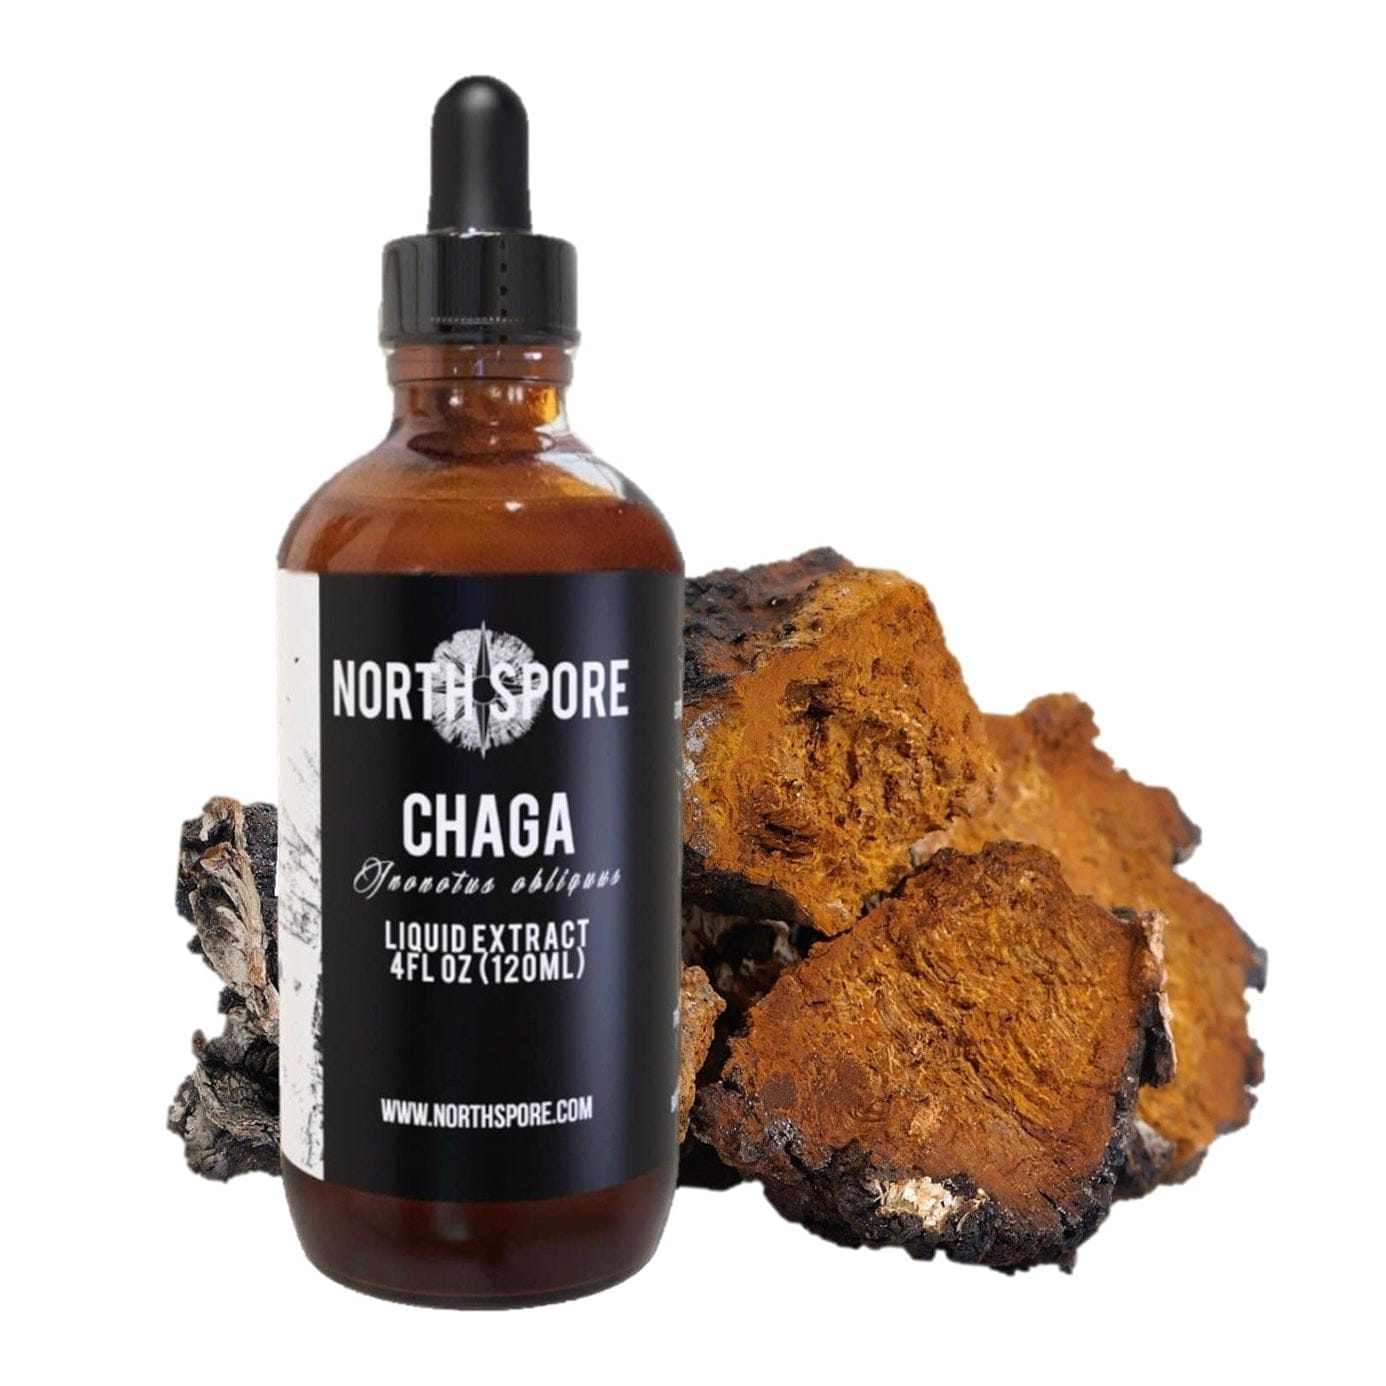 Chaga Mushroom Tincture Wellness Supplements North Spore 4 fl oz 